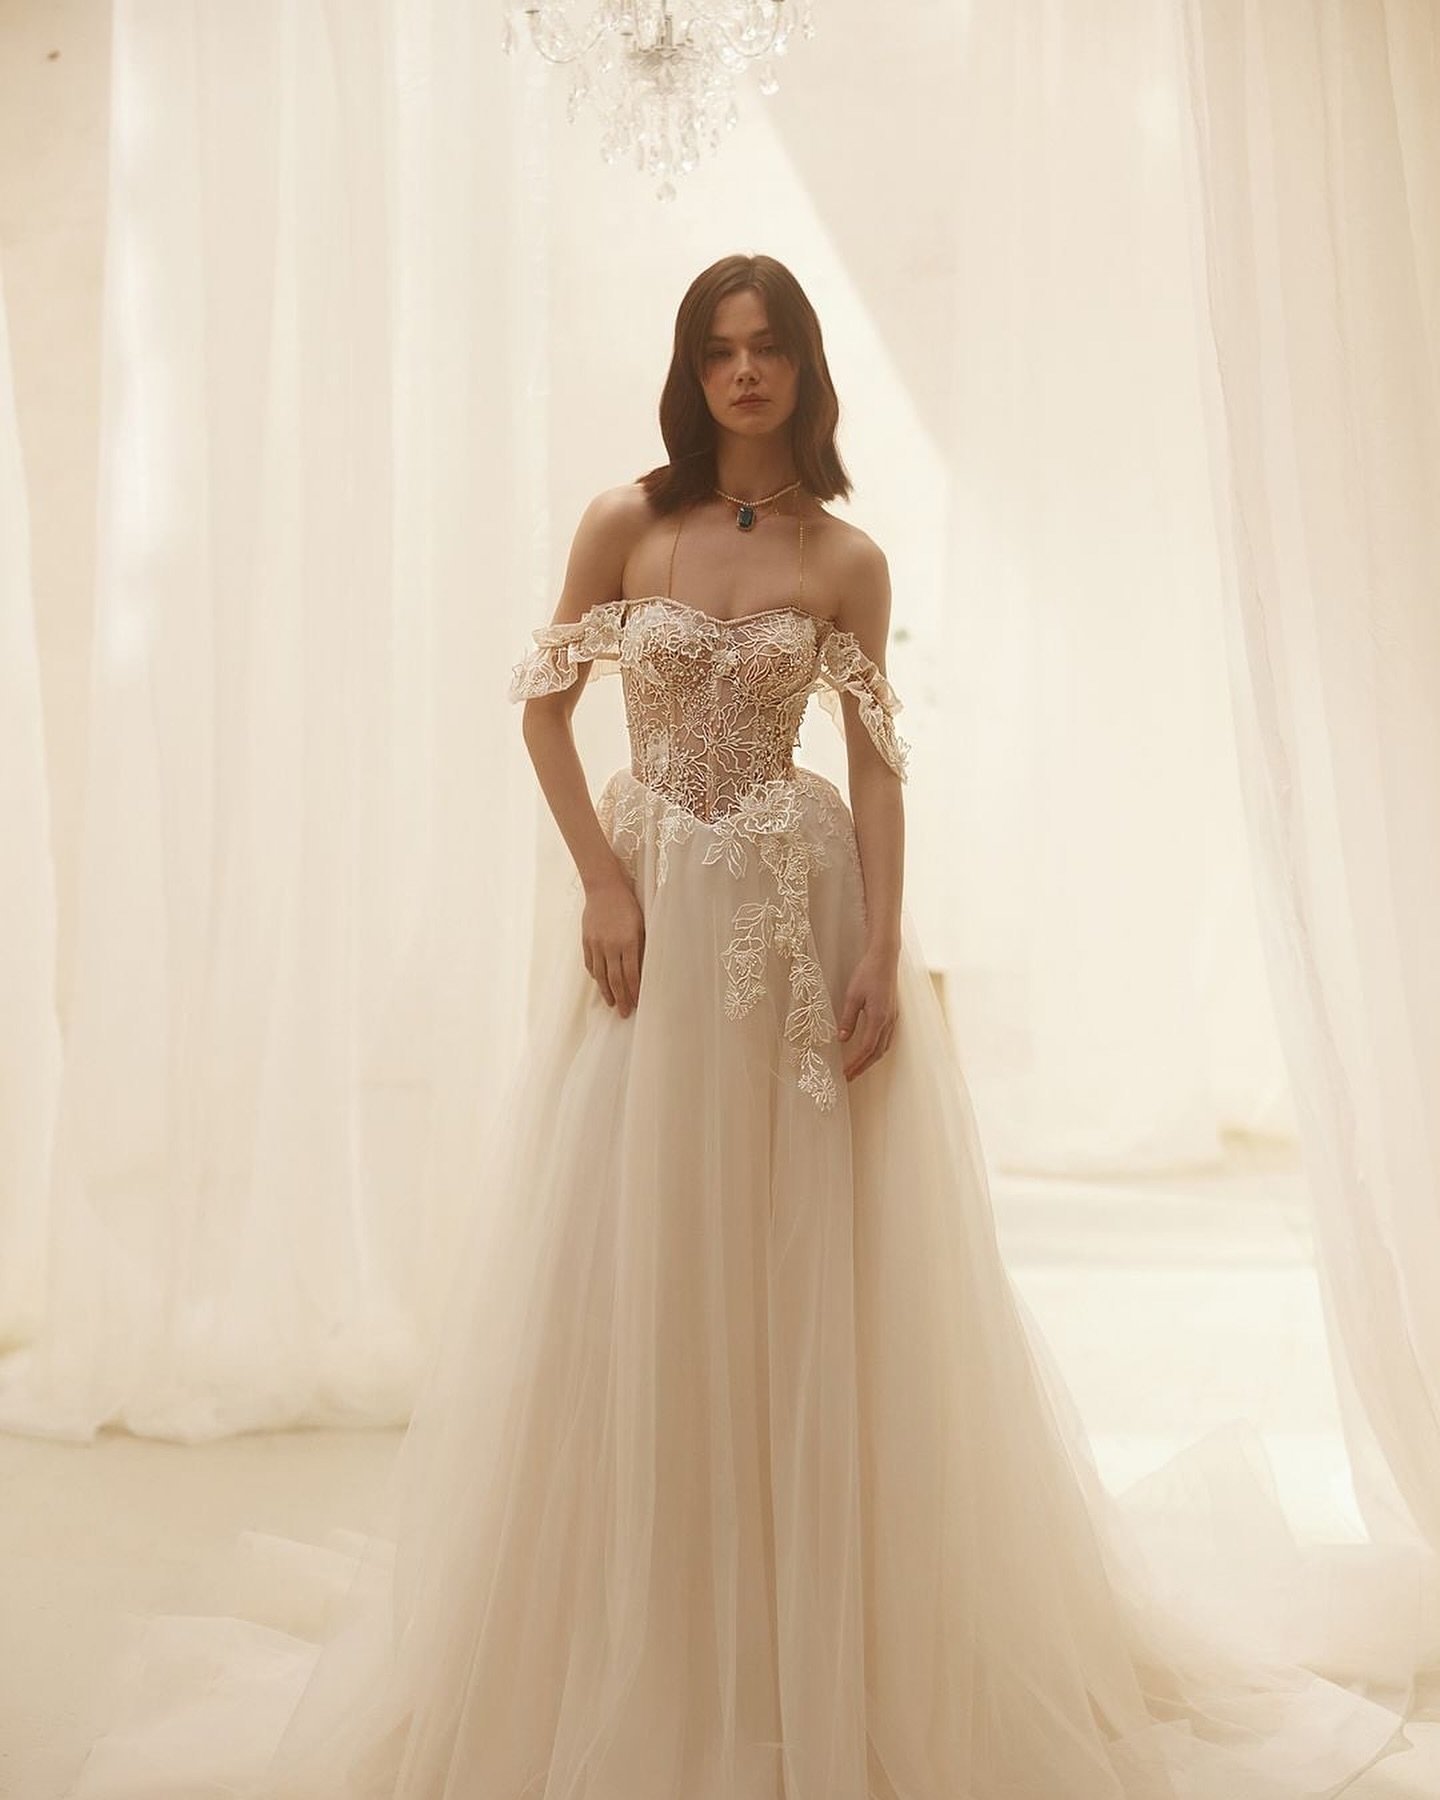 JOVELLE // Coming soon 🤫✨ 

#weddingdress #bridetobe #queenslandbrides